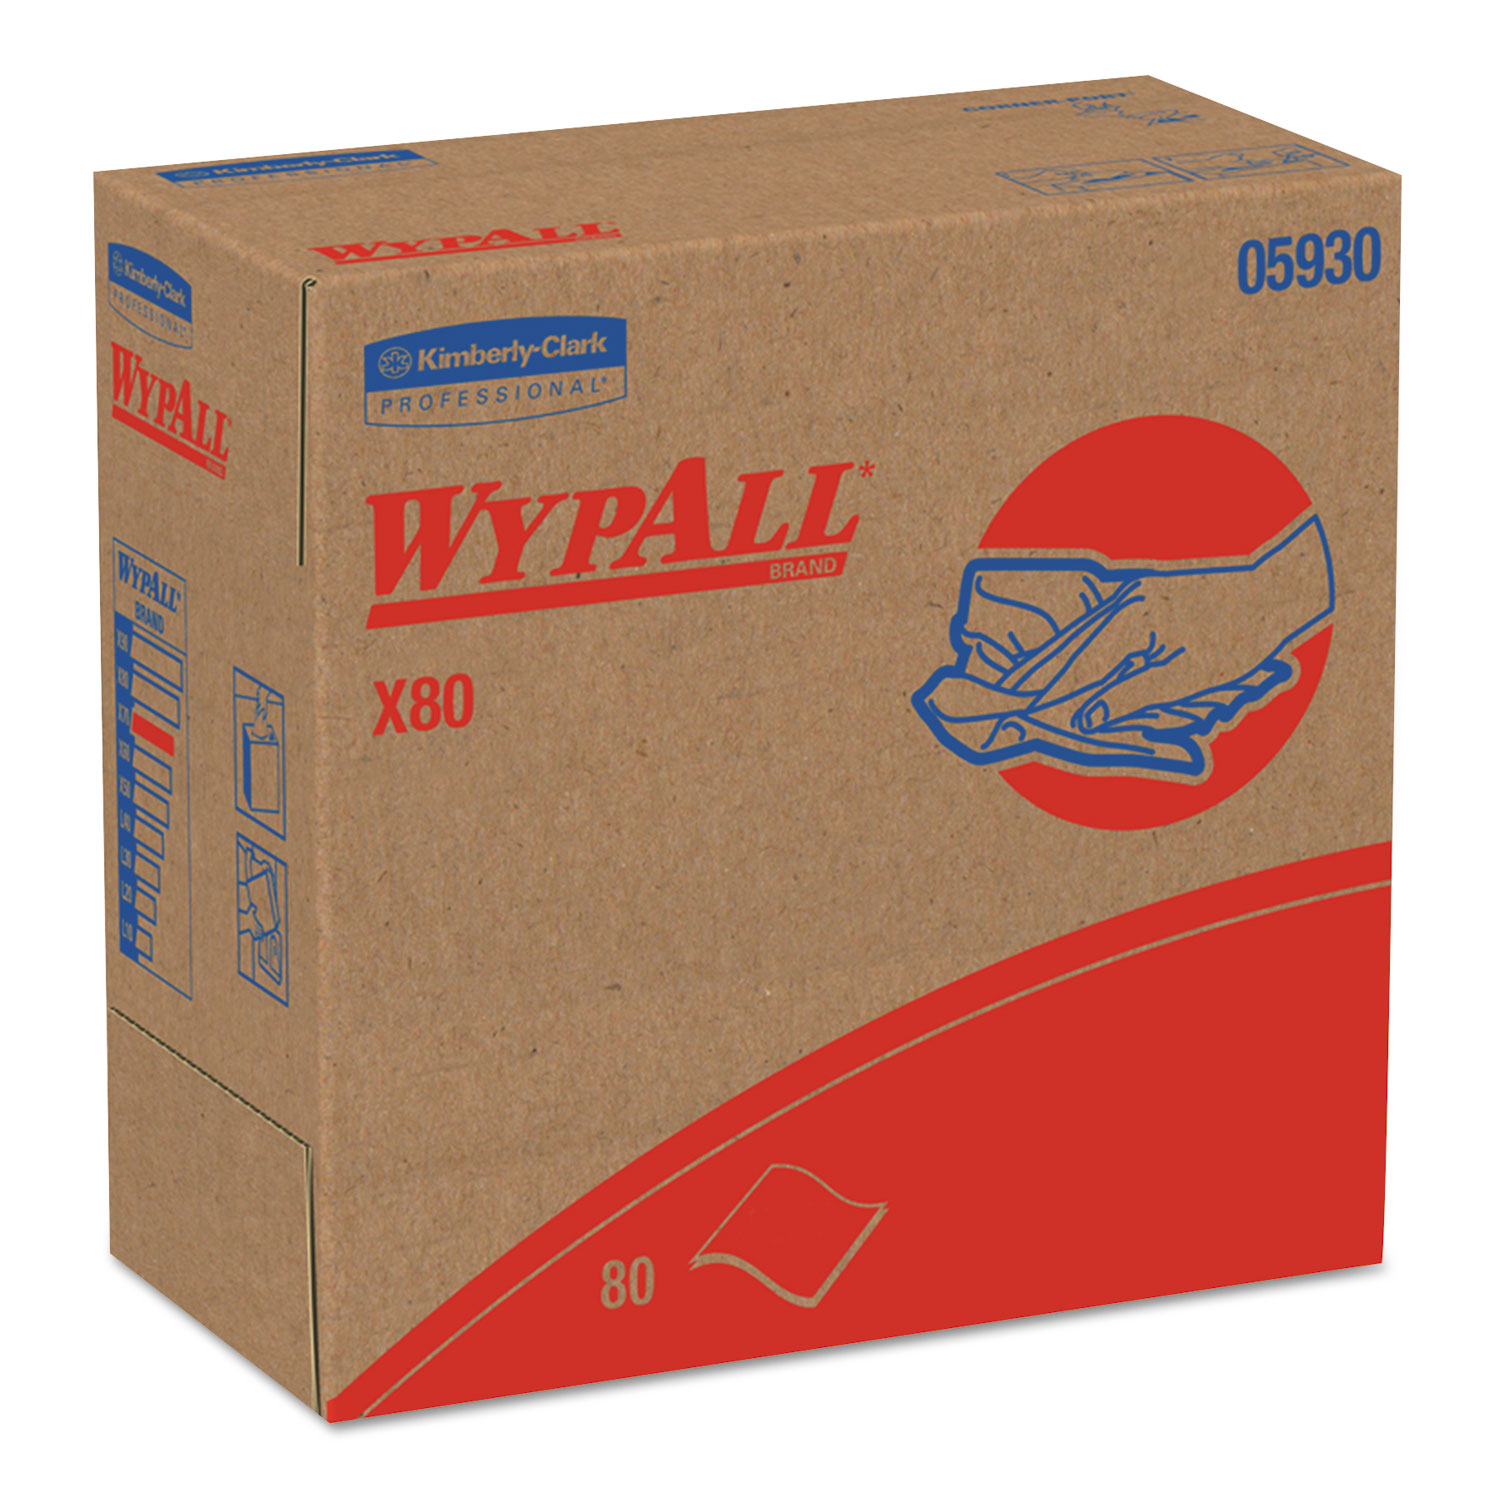  WypAll 05930 X80 Cloths with HYDROKNIT, 9.1 x 16.8, Red, Pop-Up Box, 80/Box, 5 Box/Carton (KCC05930) 